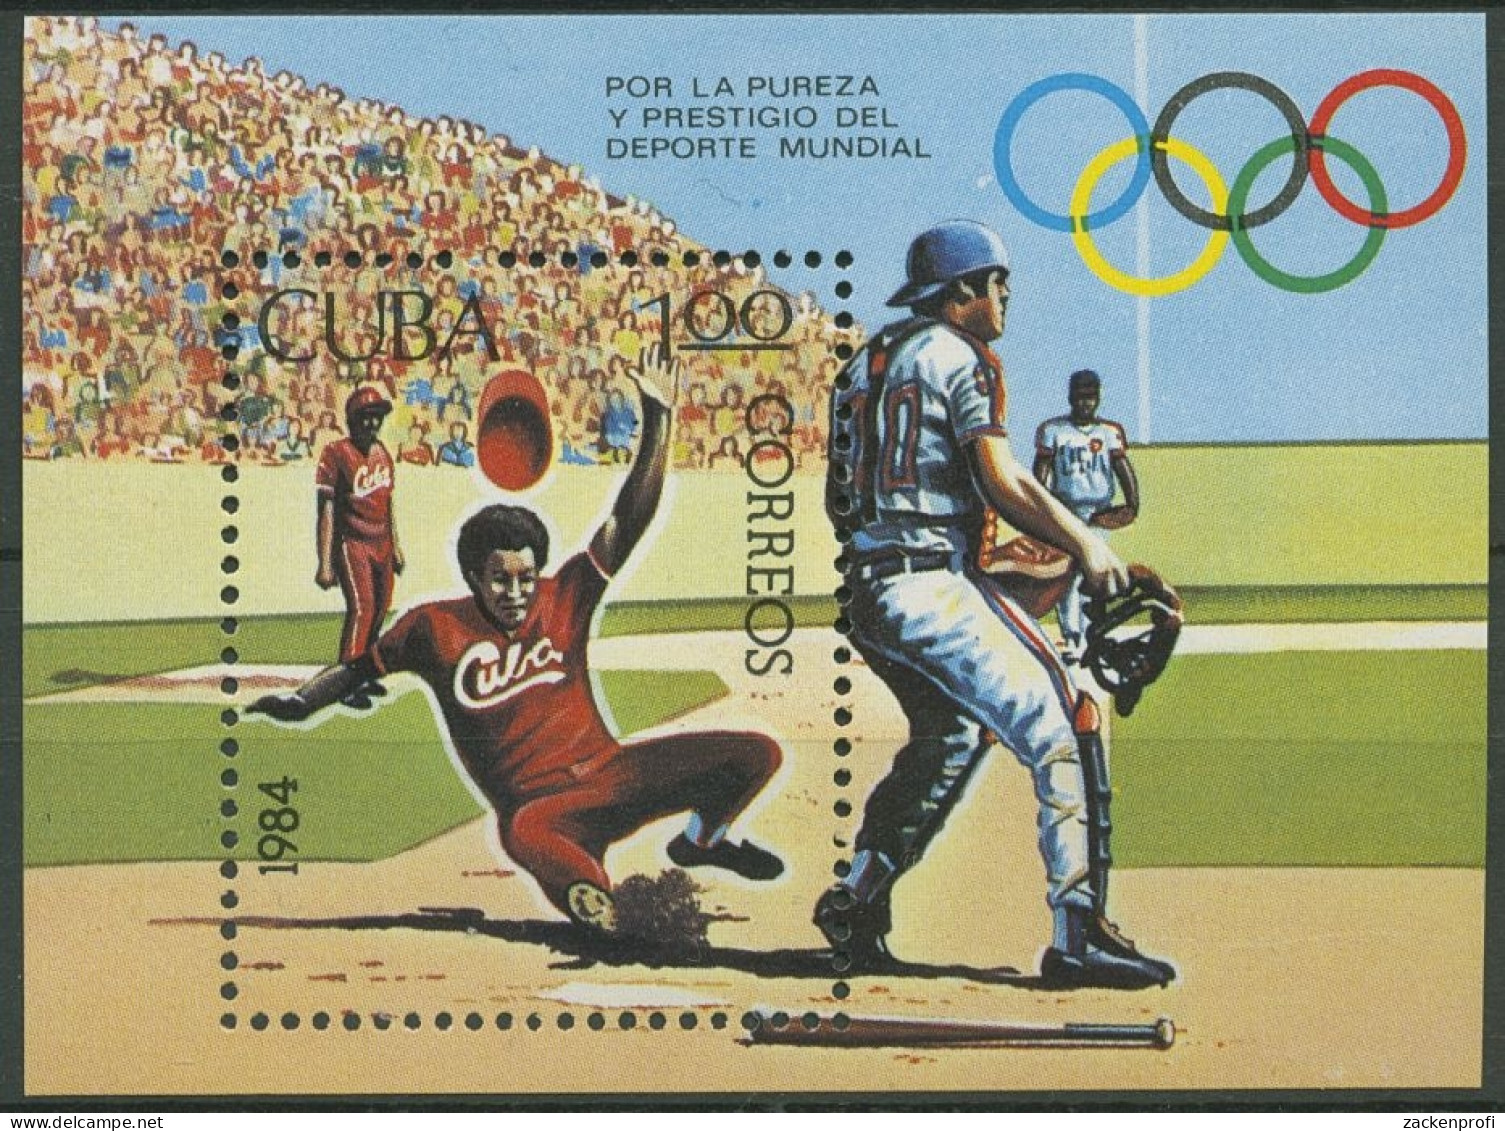 Kuba 1984 Sportförderung Baseball Block 84 Postfrisch (C94077) - Hojas Y Bloques